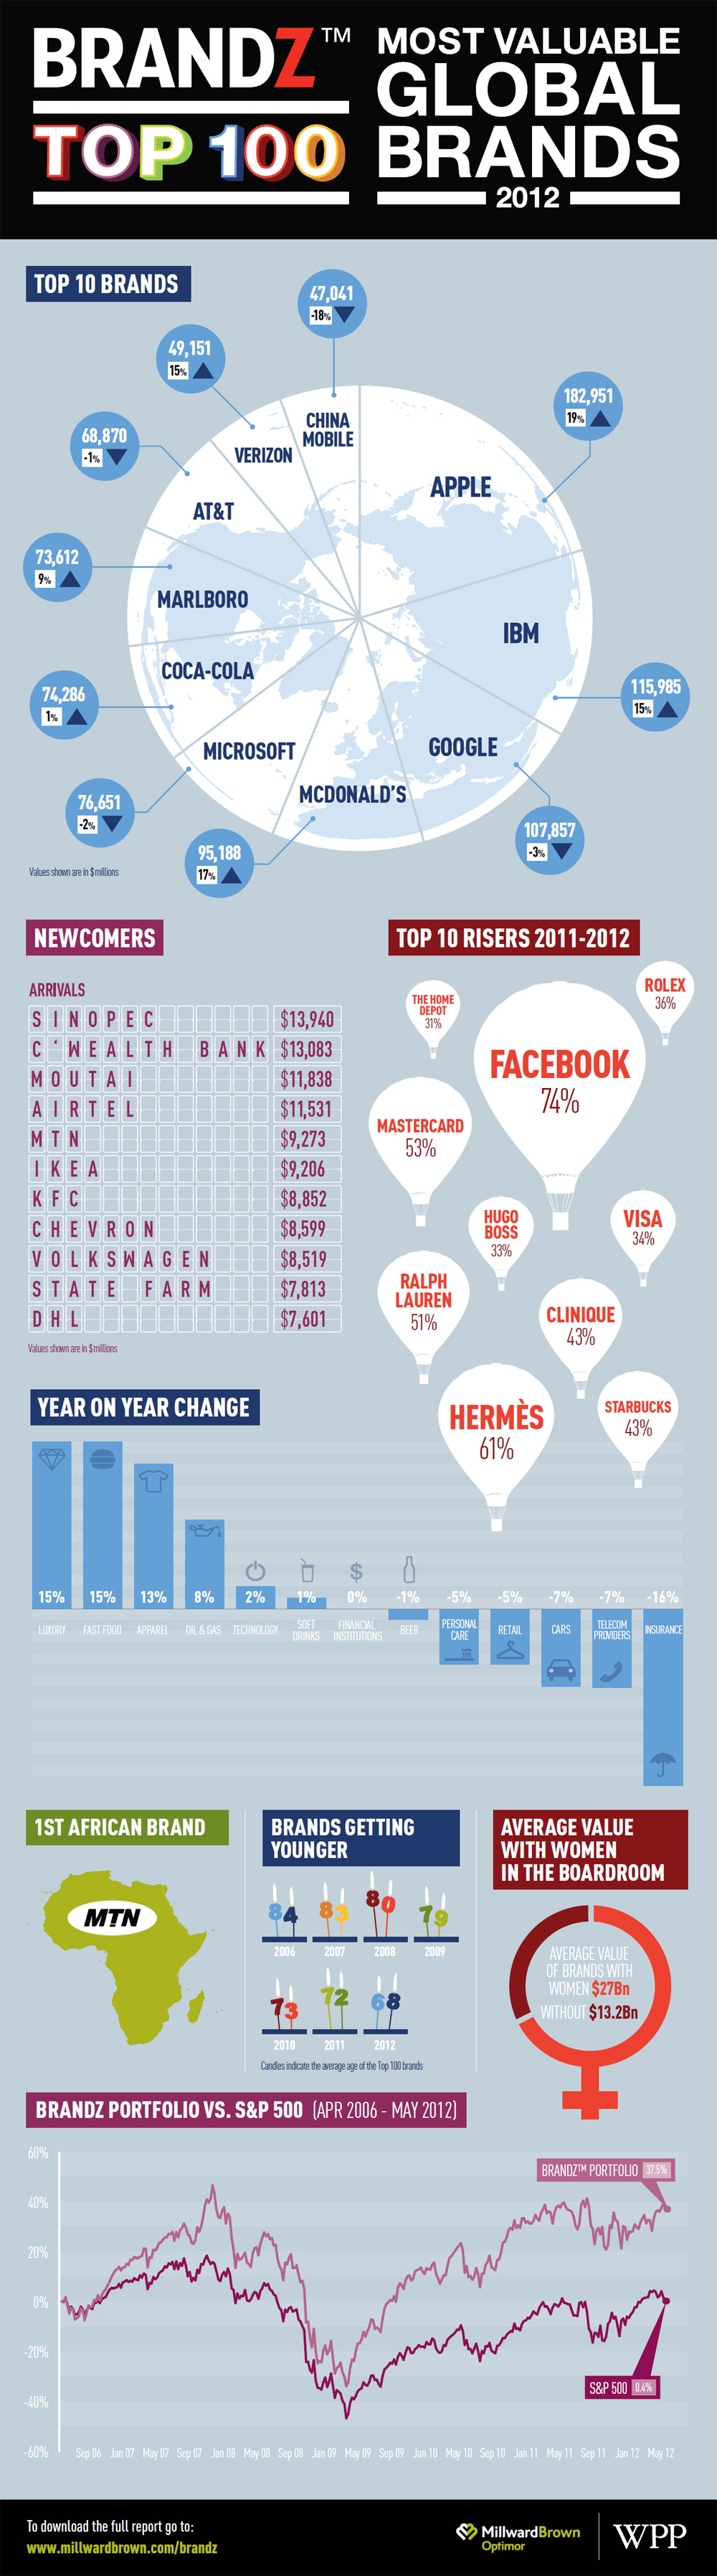 BrandZ 2012 Infographic